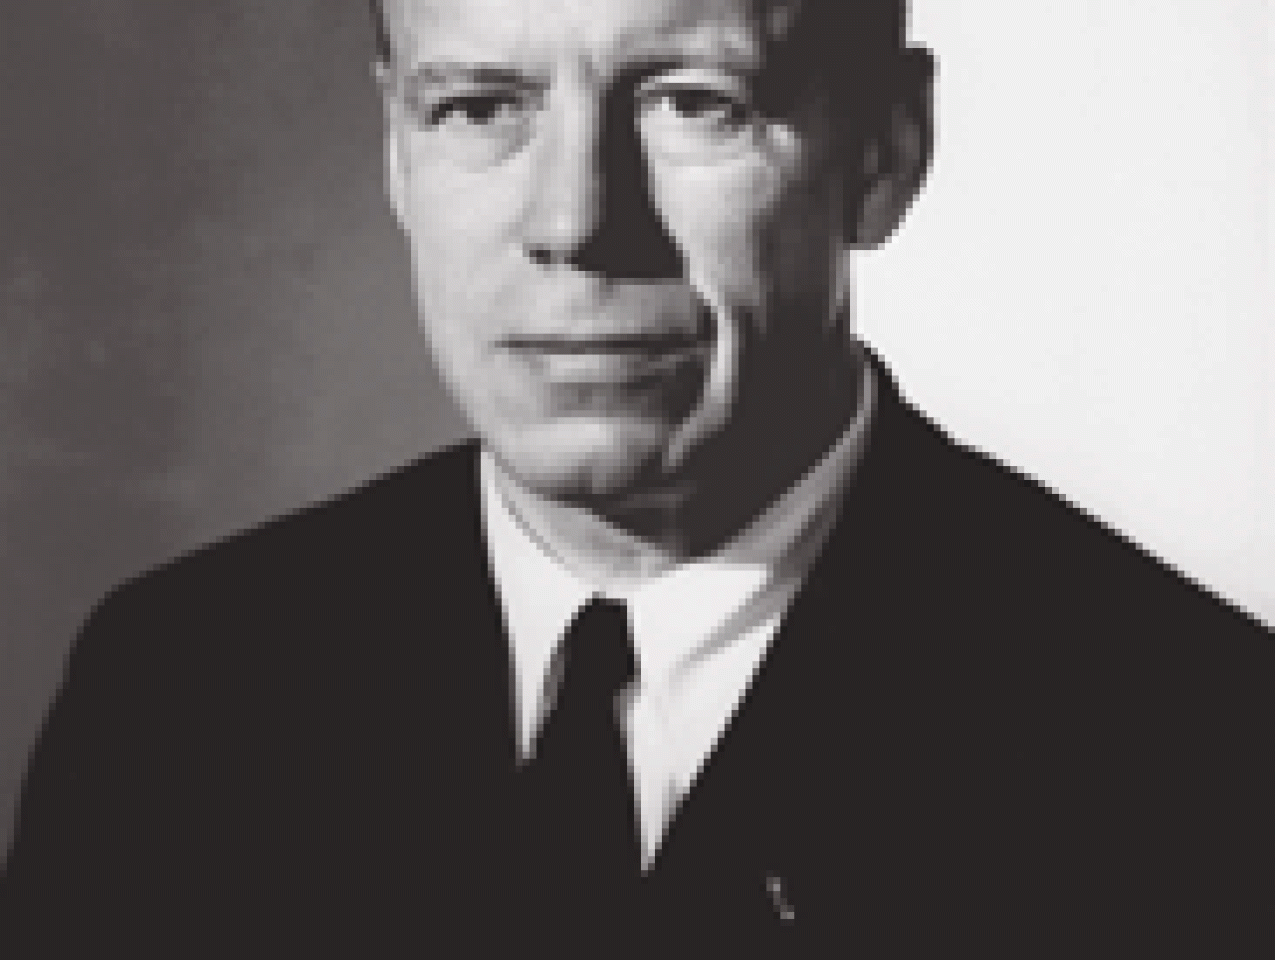 Judge Robert P. Patterson